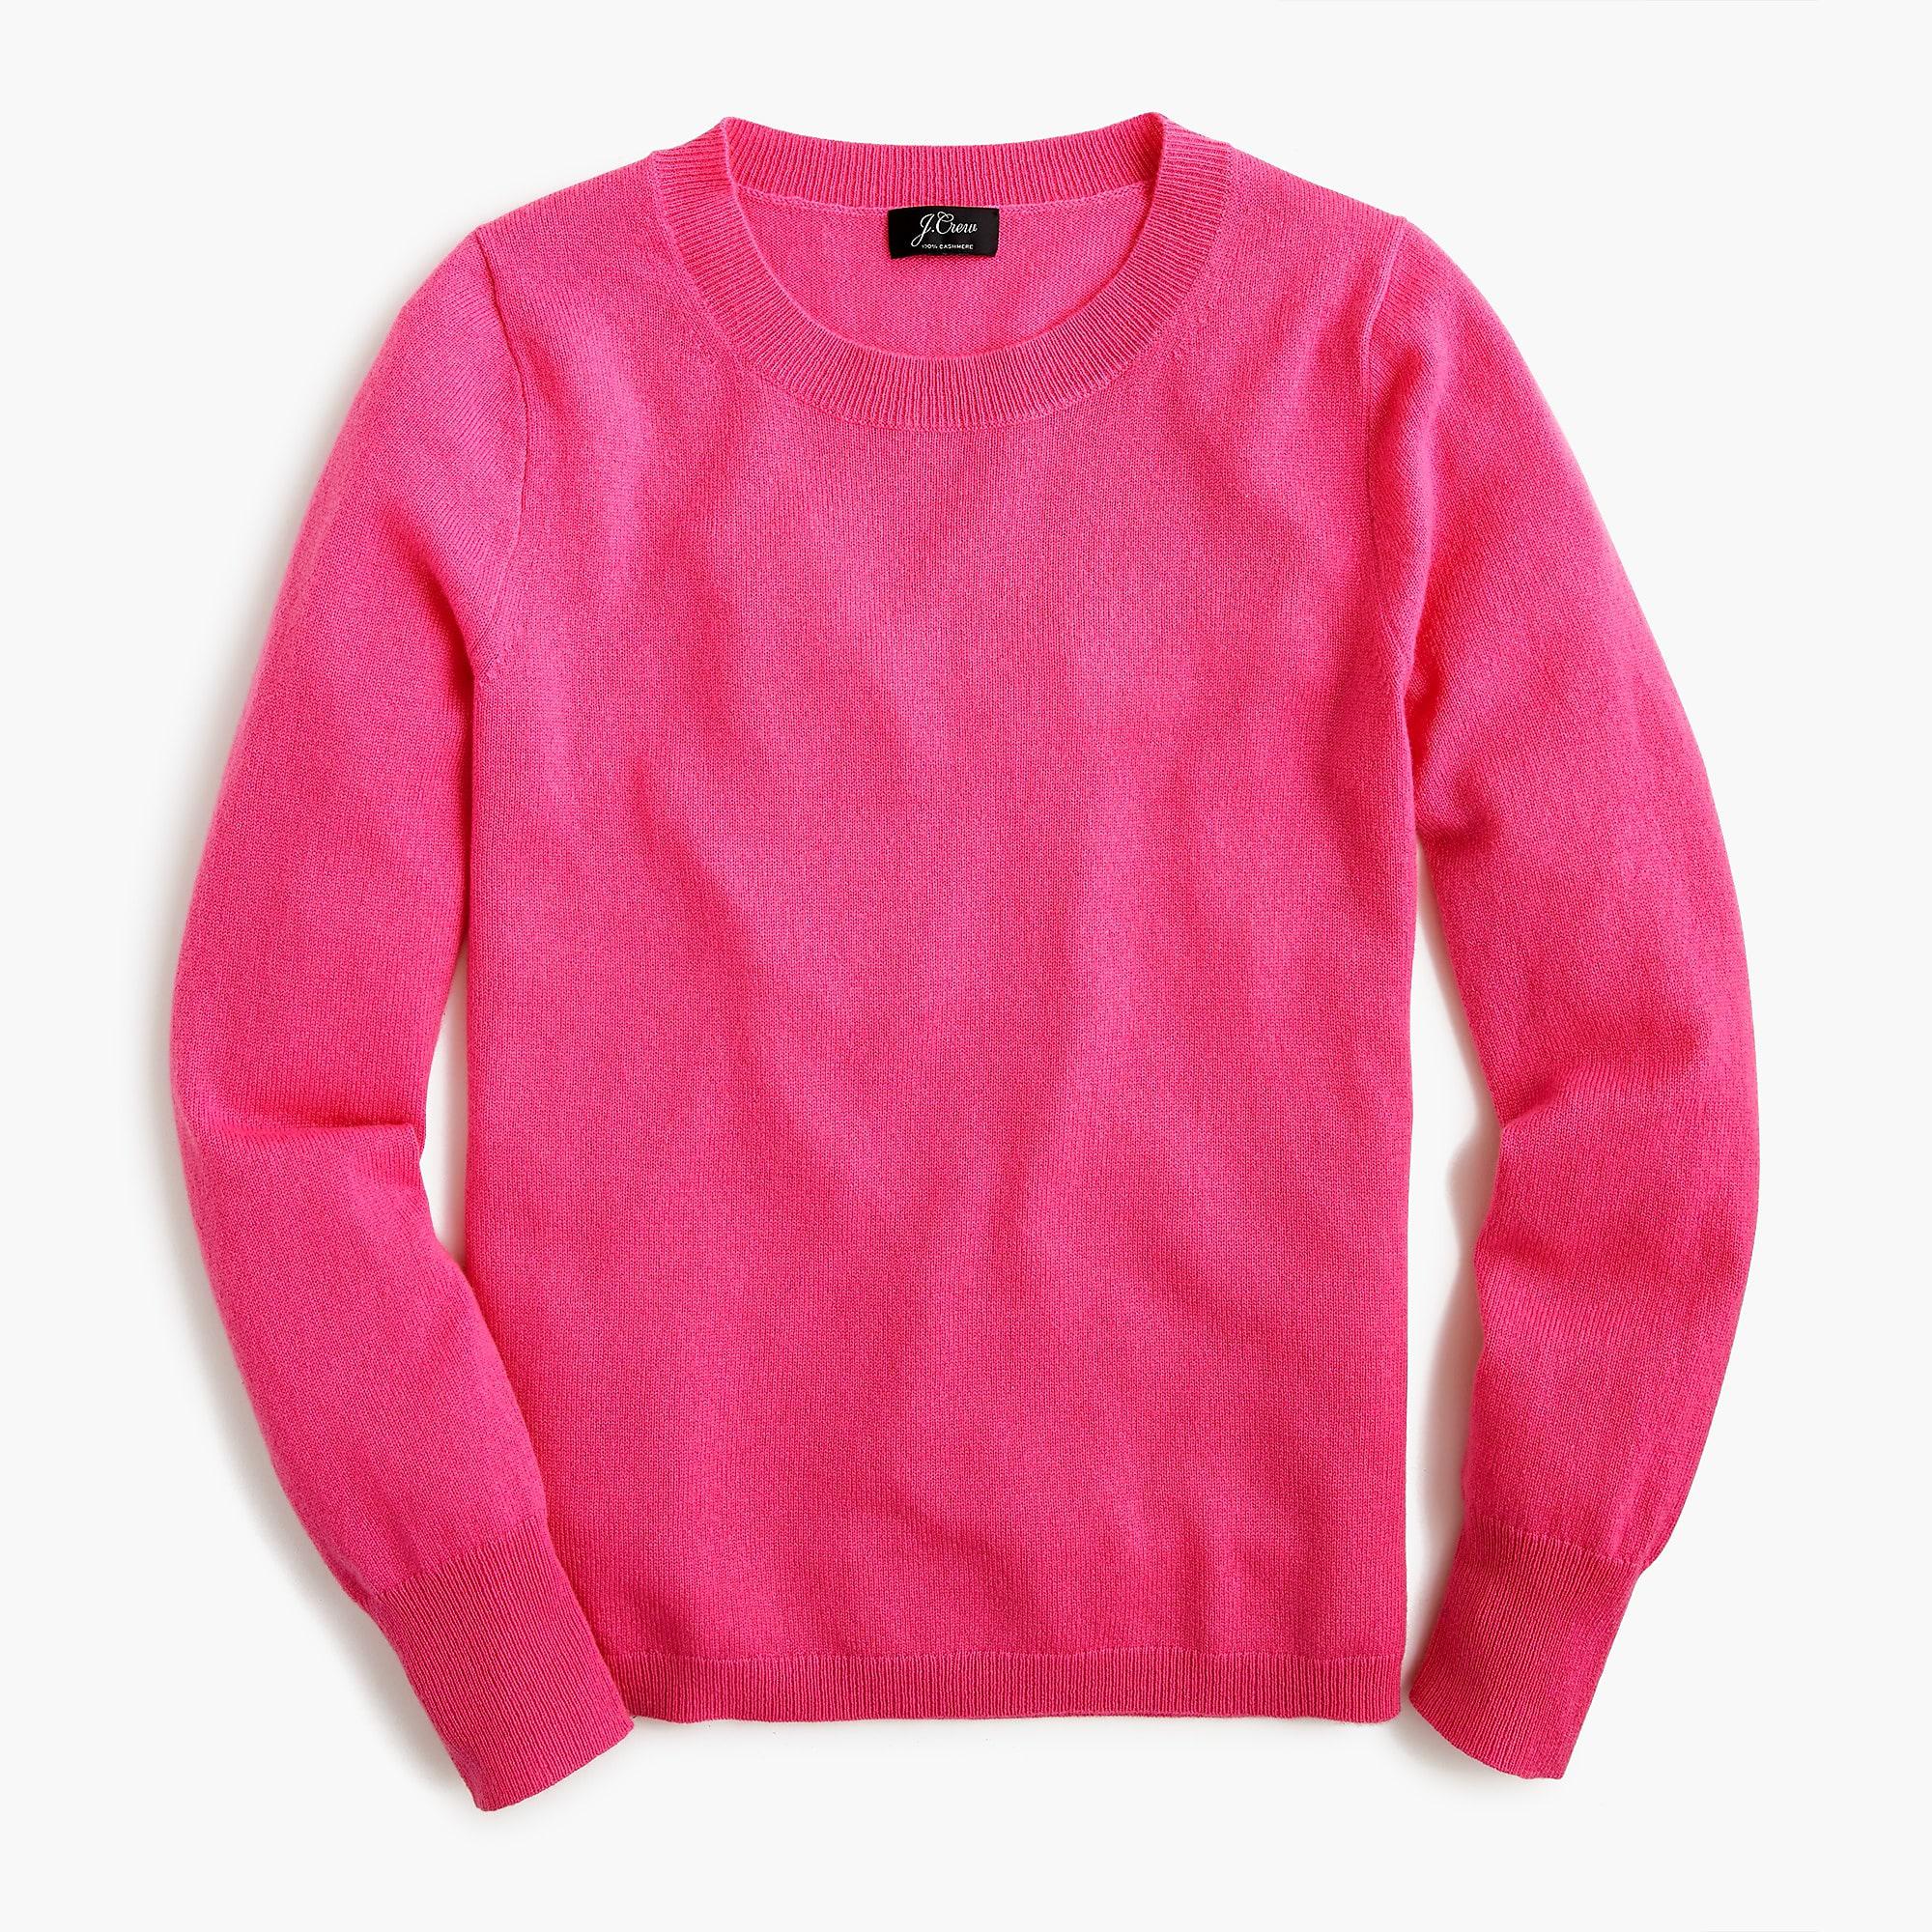 J.Crew Cashmere Crewneck Sweater in Pink - Lyst